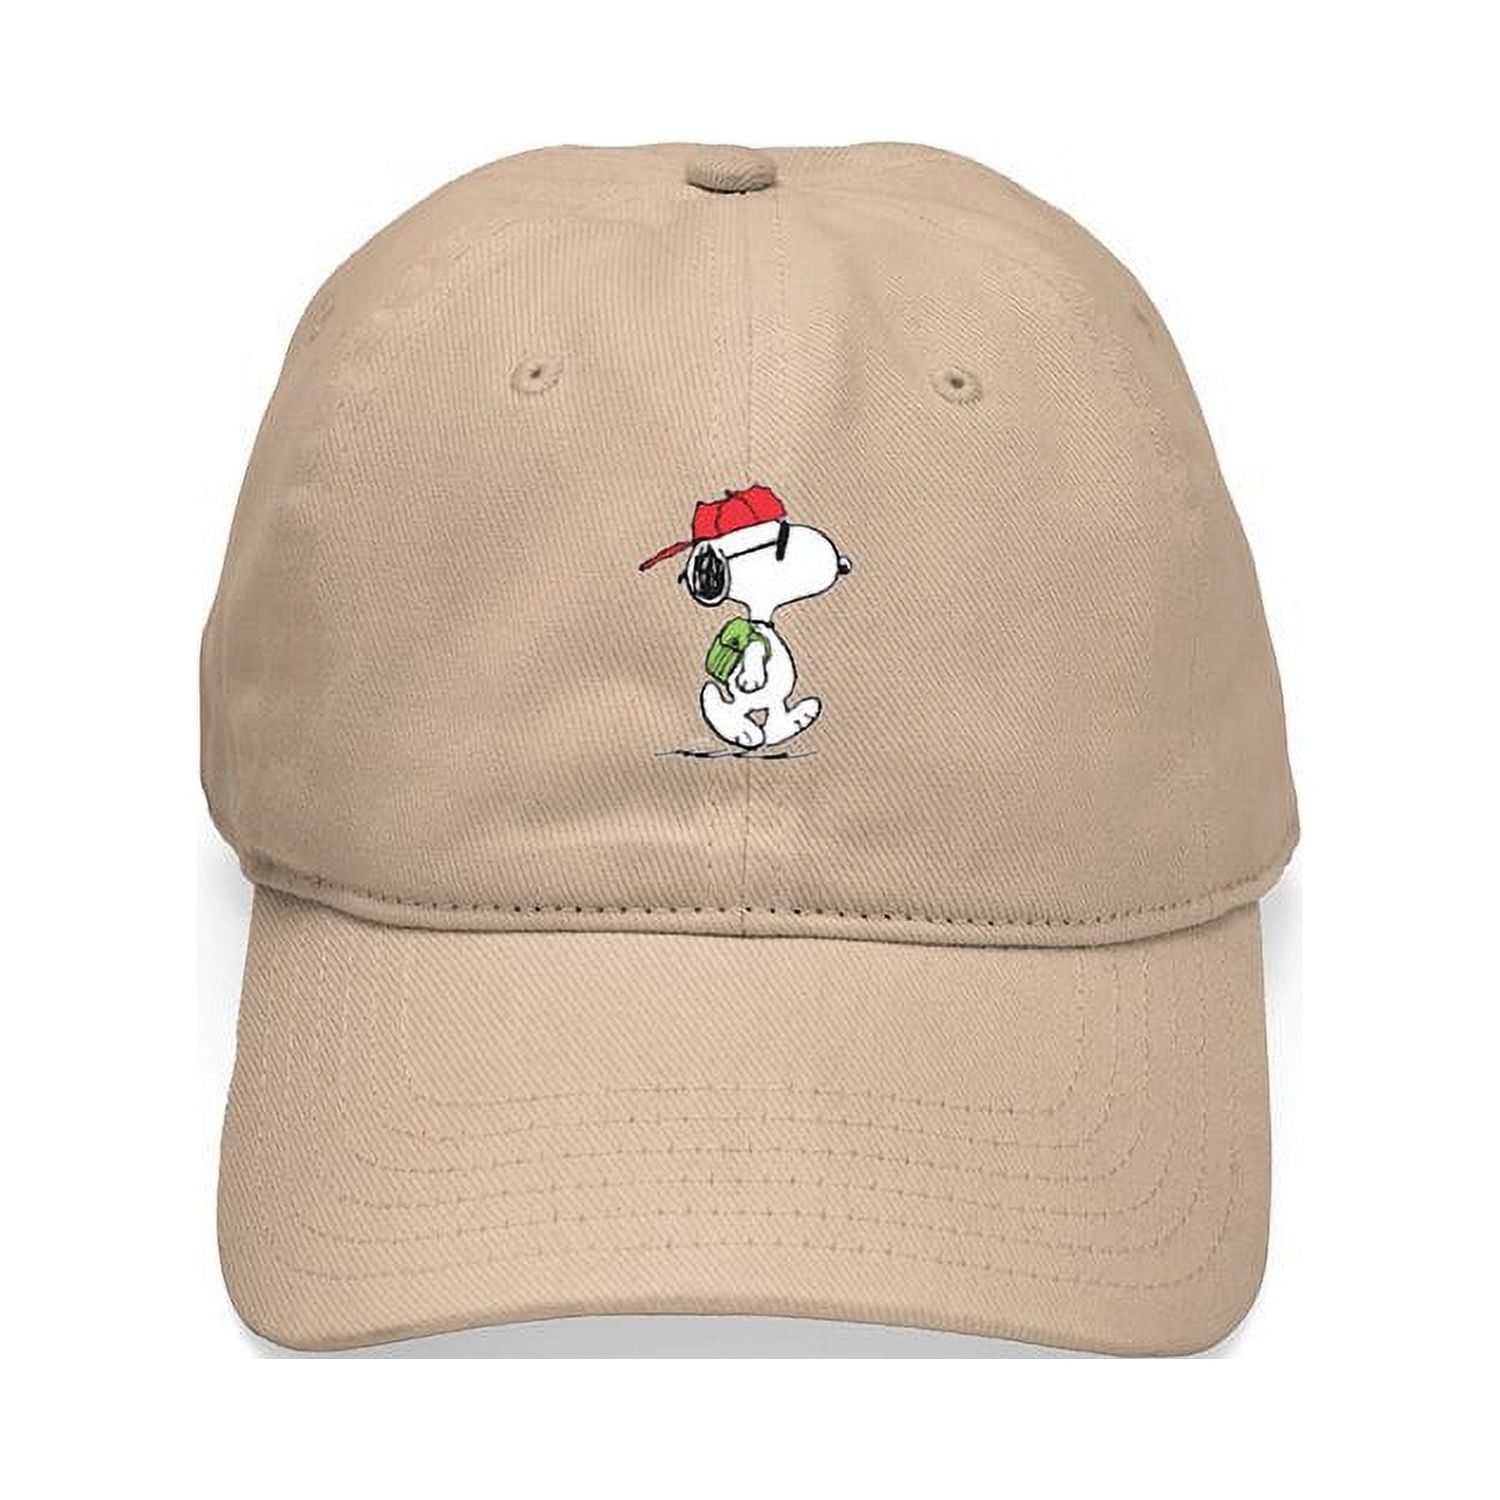 CafePress - SNOOPY Joe Cool - Printed Adjustable Baseball Hat